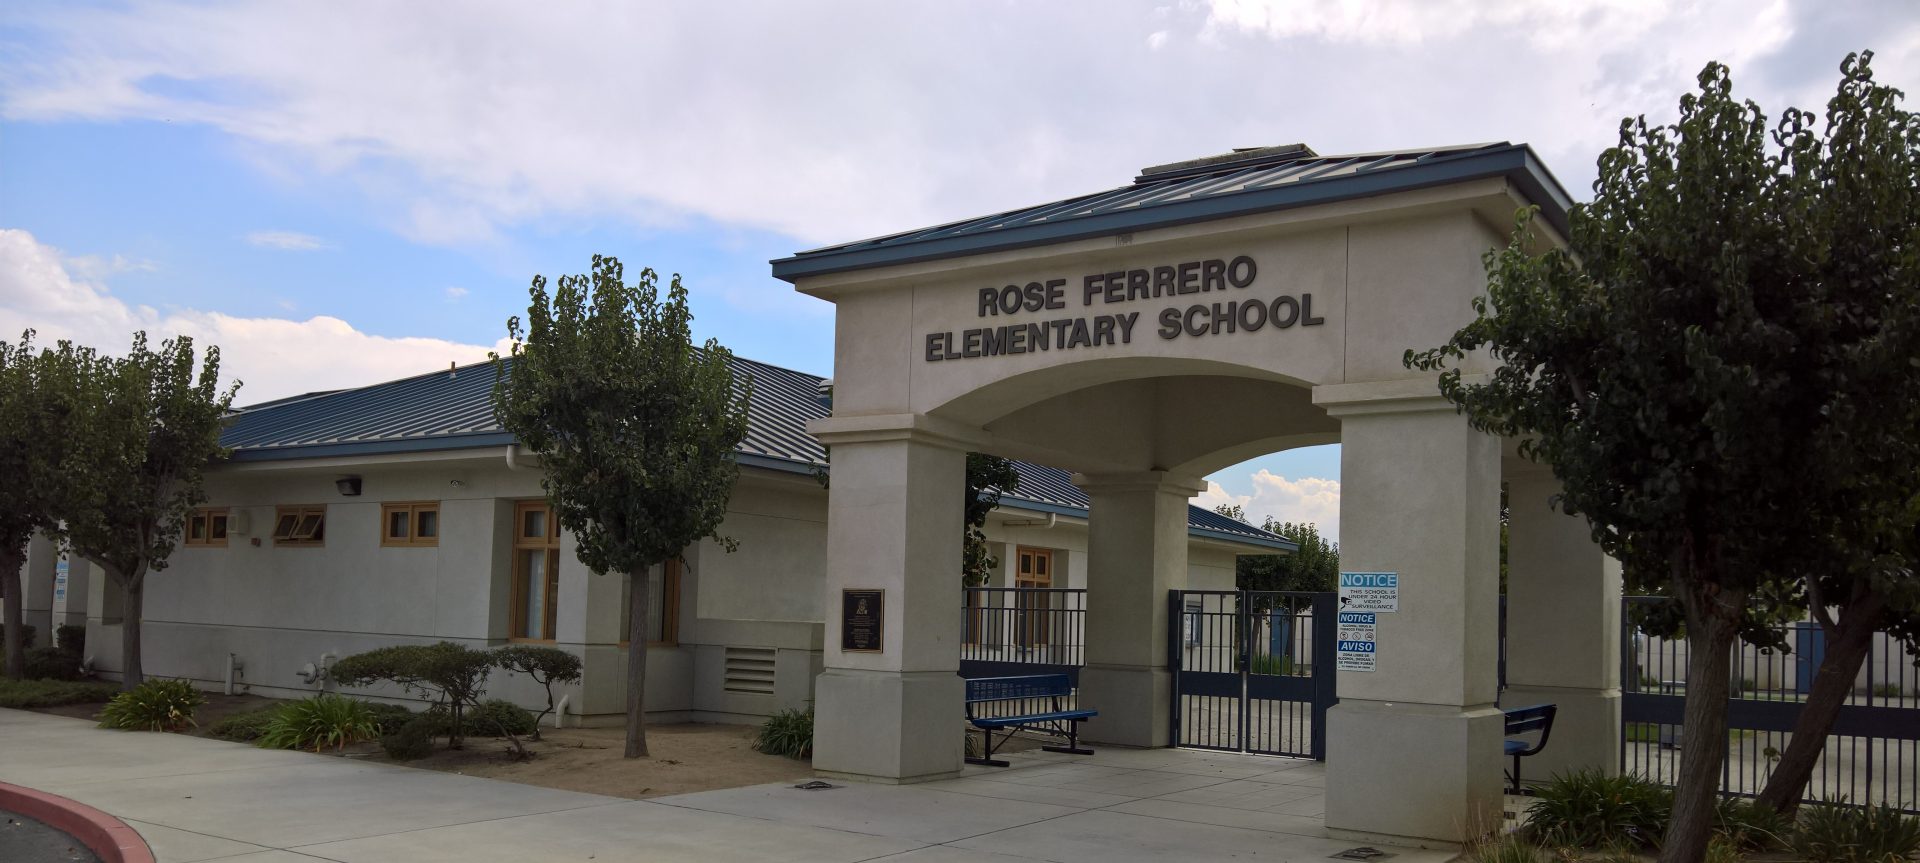 Rose Ferrero Elementary School